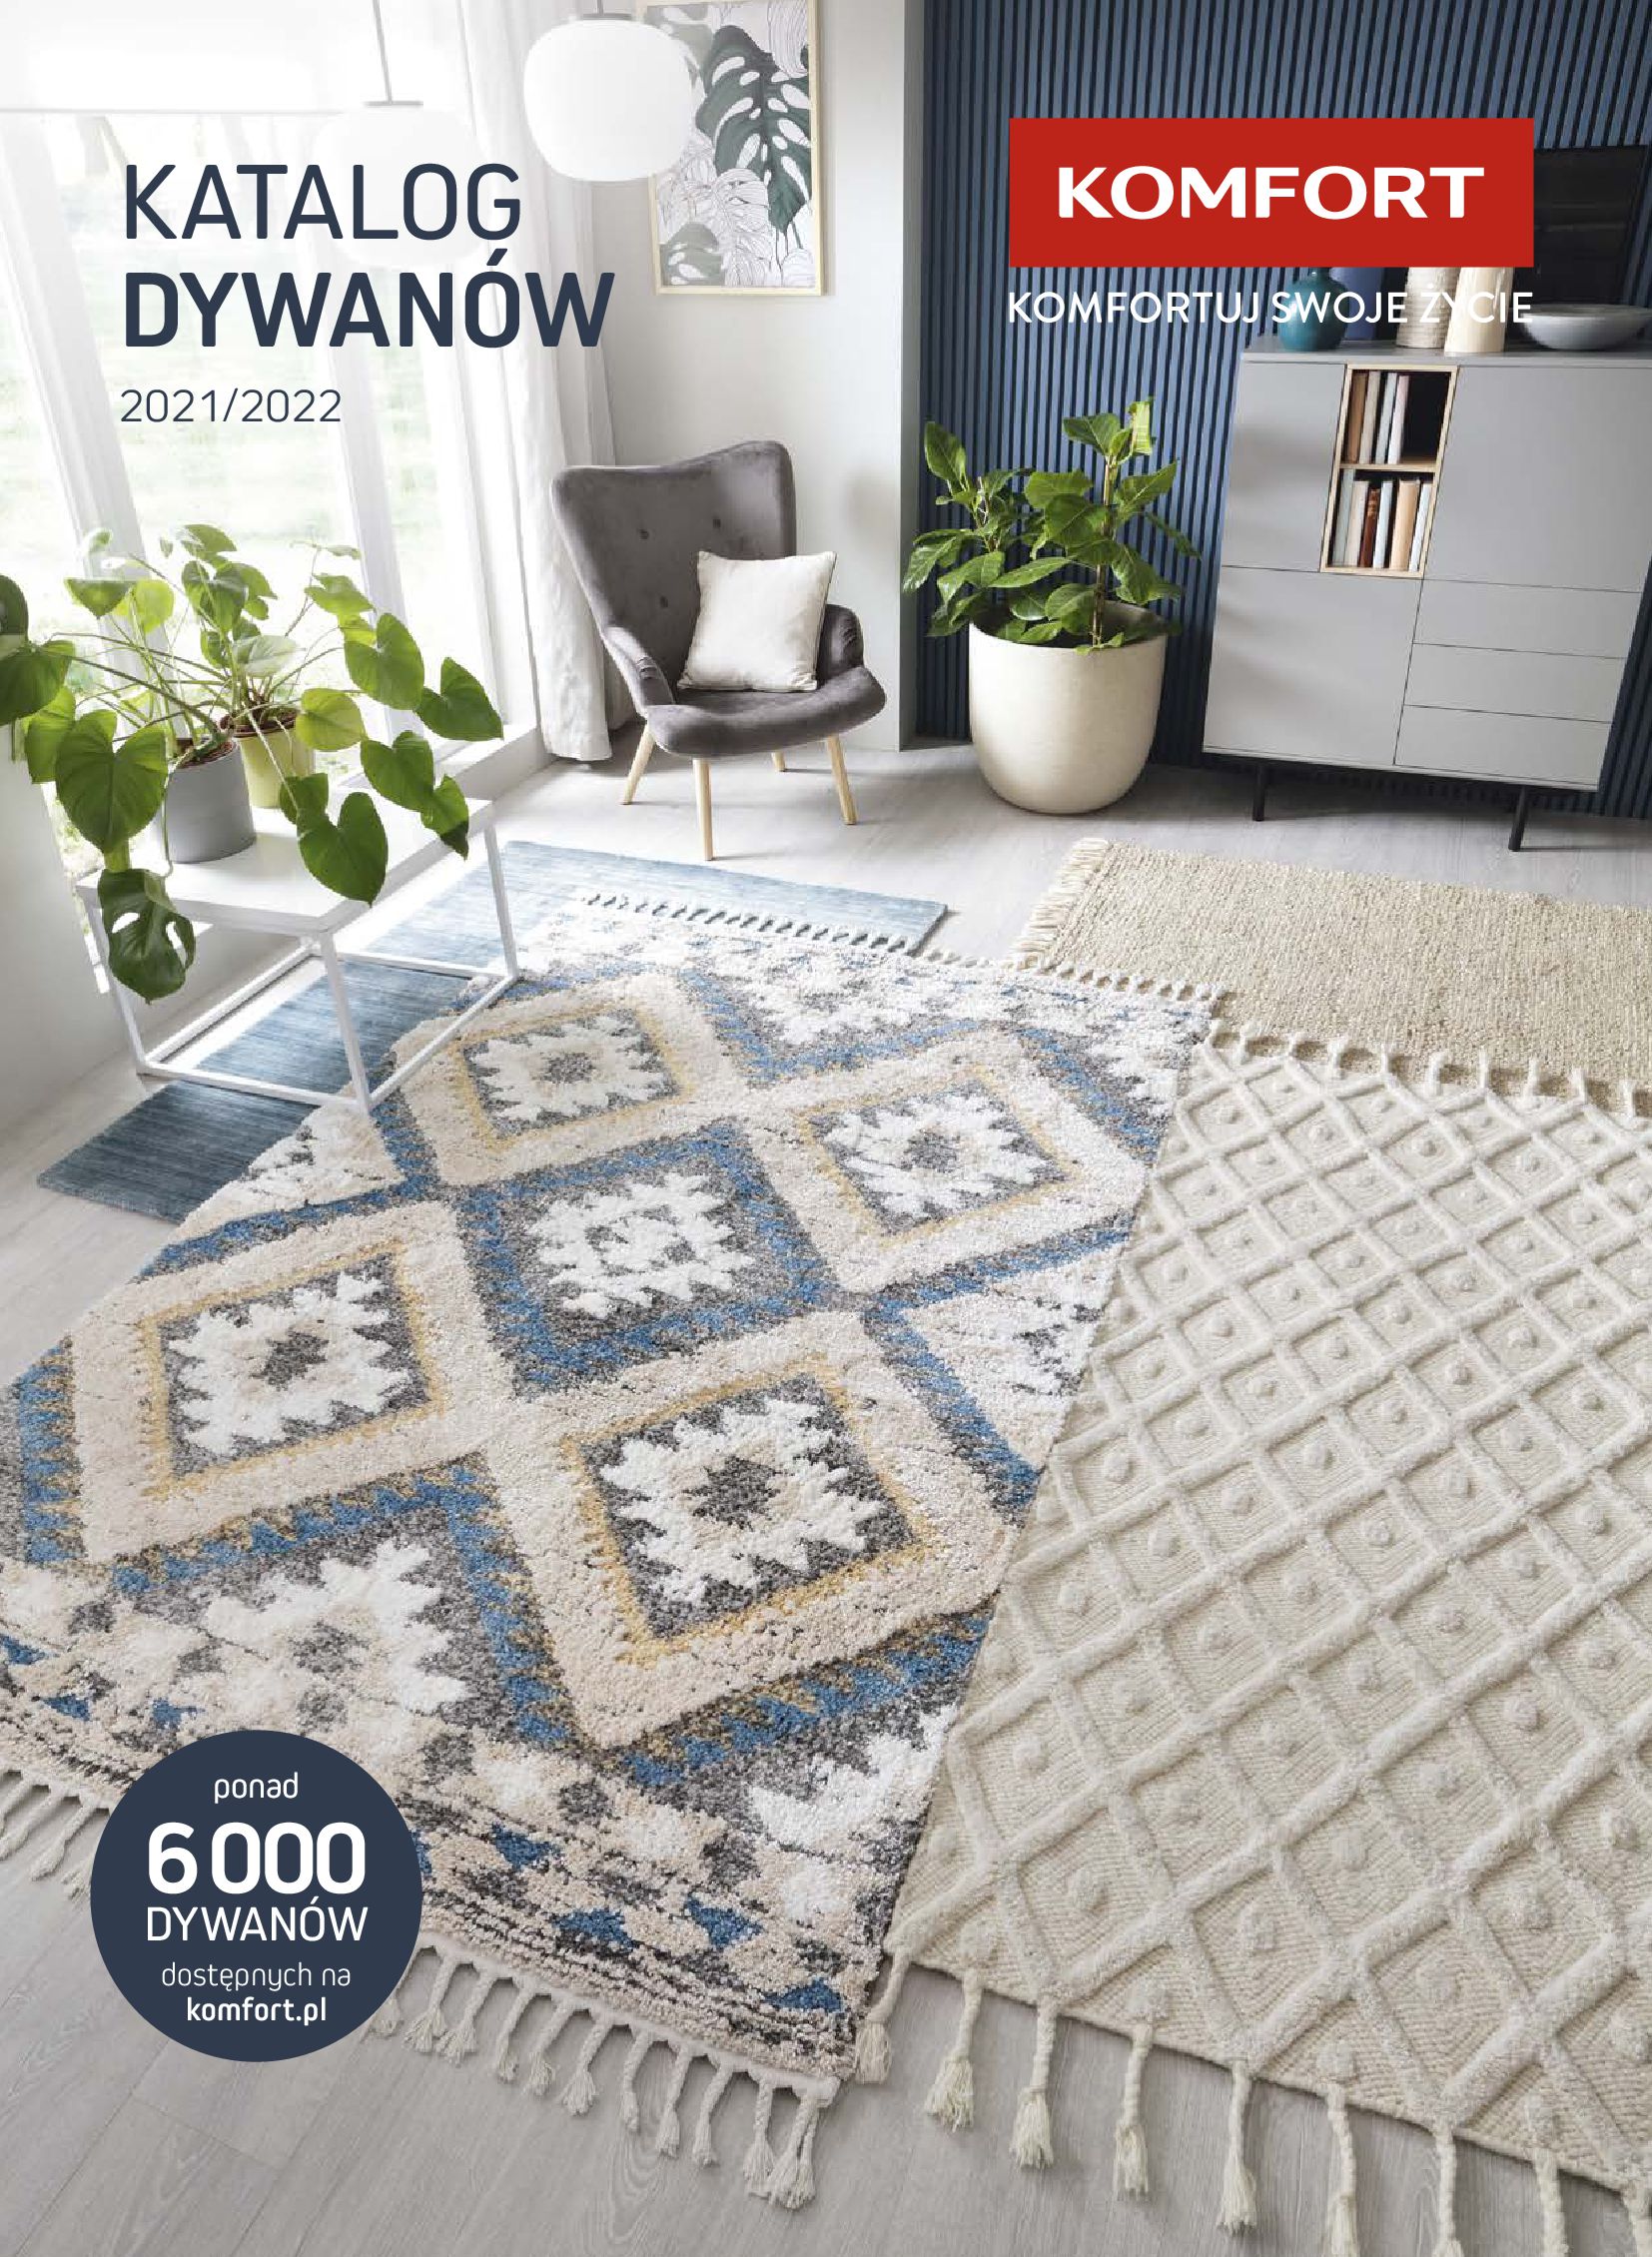 Komfort:  Komfort - Katalog dywanów 09.10.2021